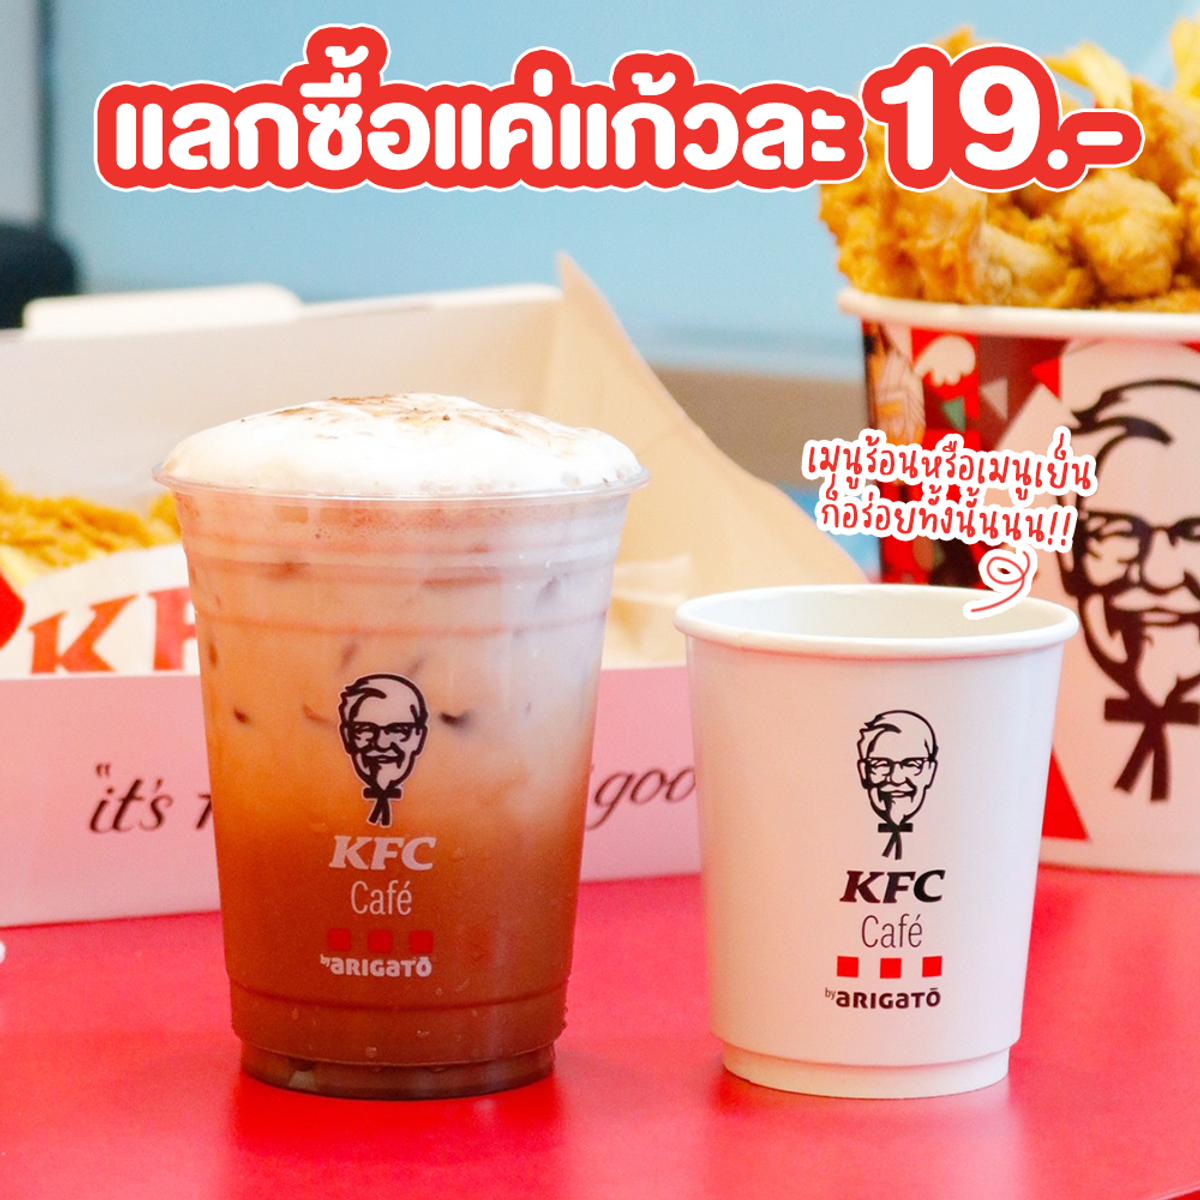 KFC Café by Arigato on Weekend